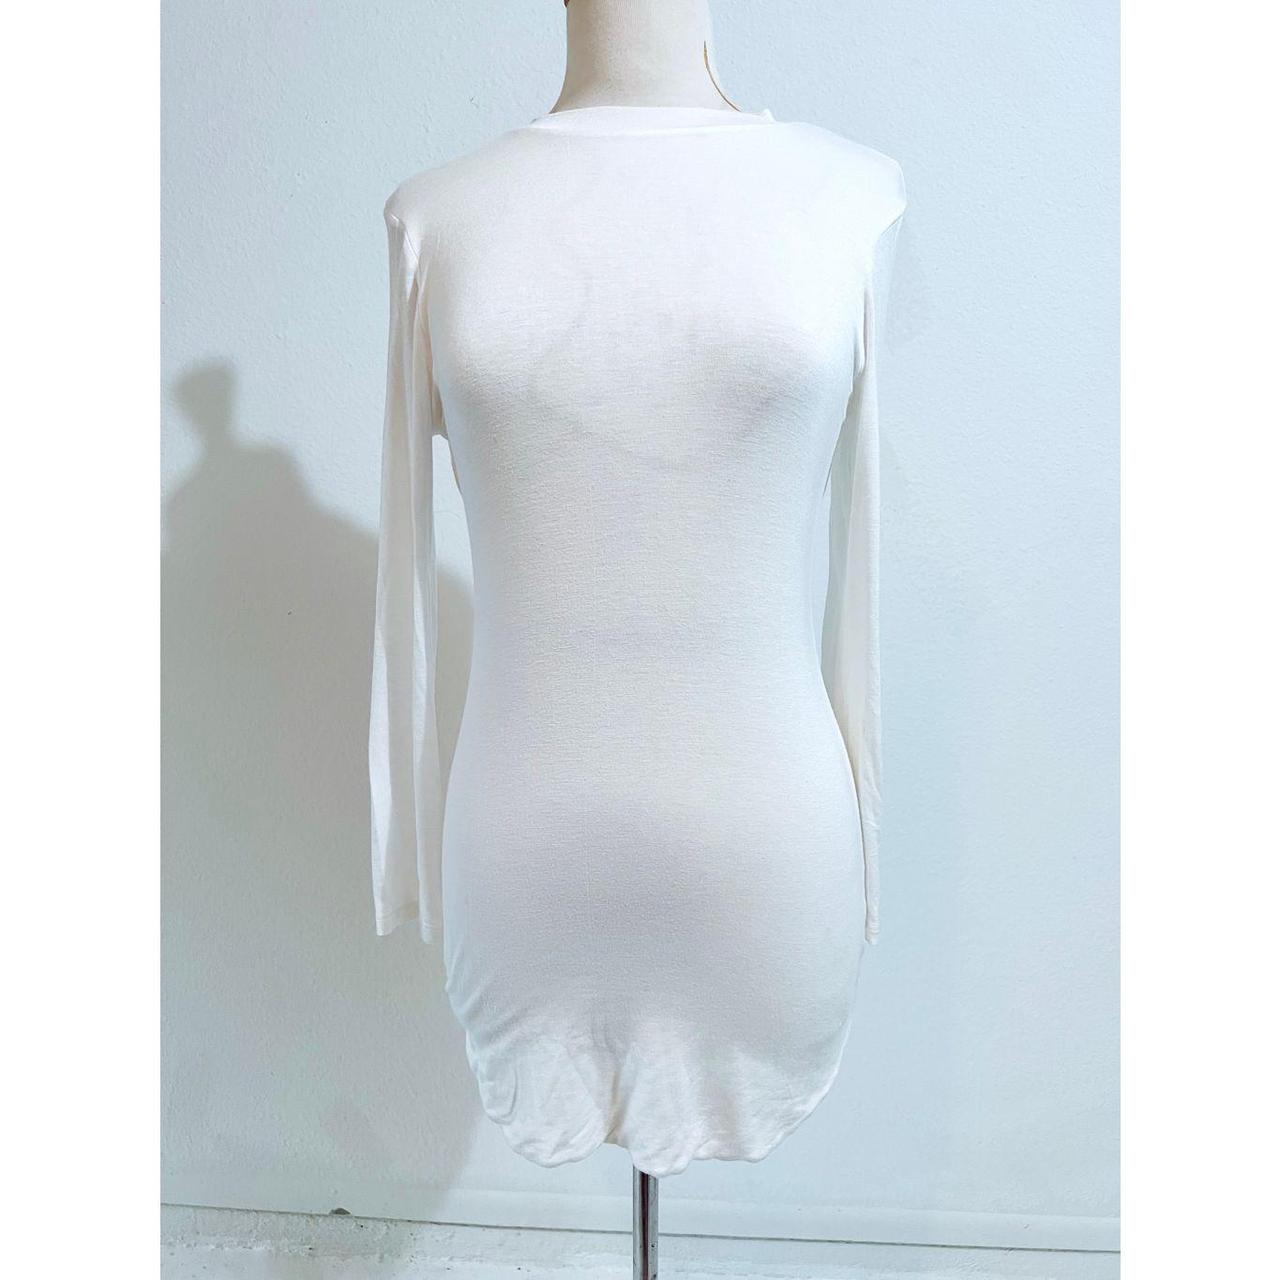 Product Image 1 - Fashion Nova White Bodycon Dress
✨✨✨✨✨✨
Simple